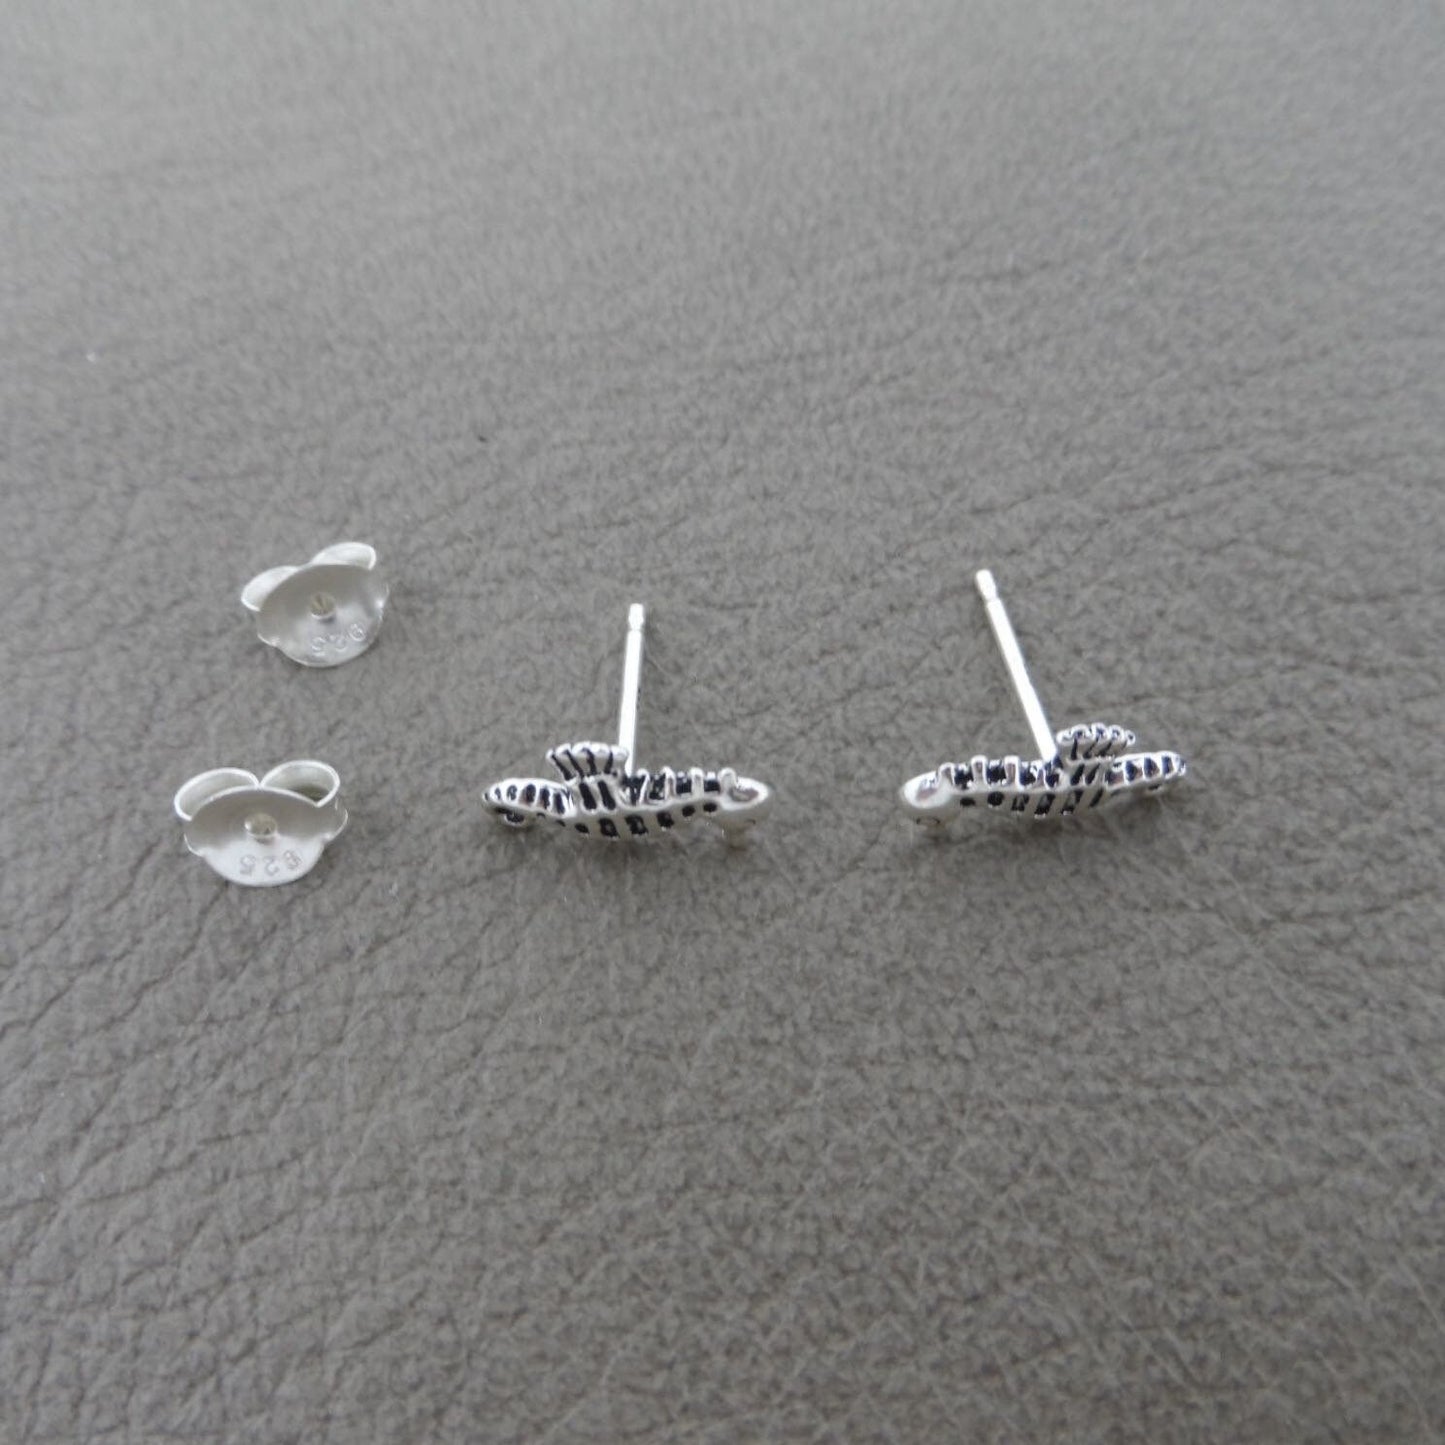 Seahorse Earrings in Sterling Silver